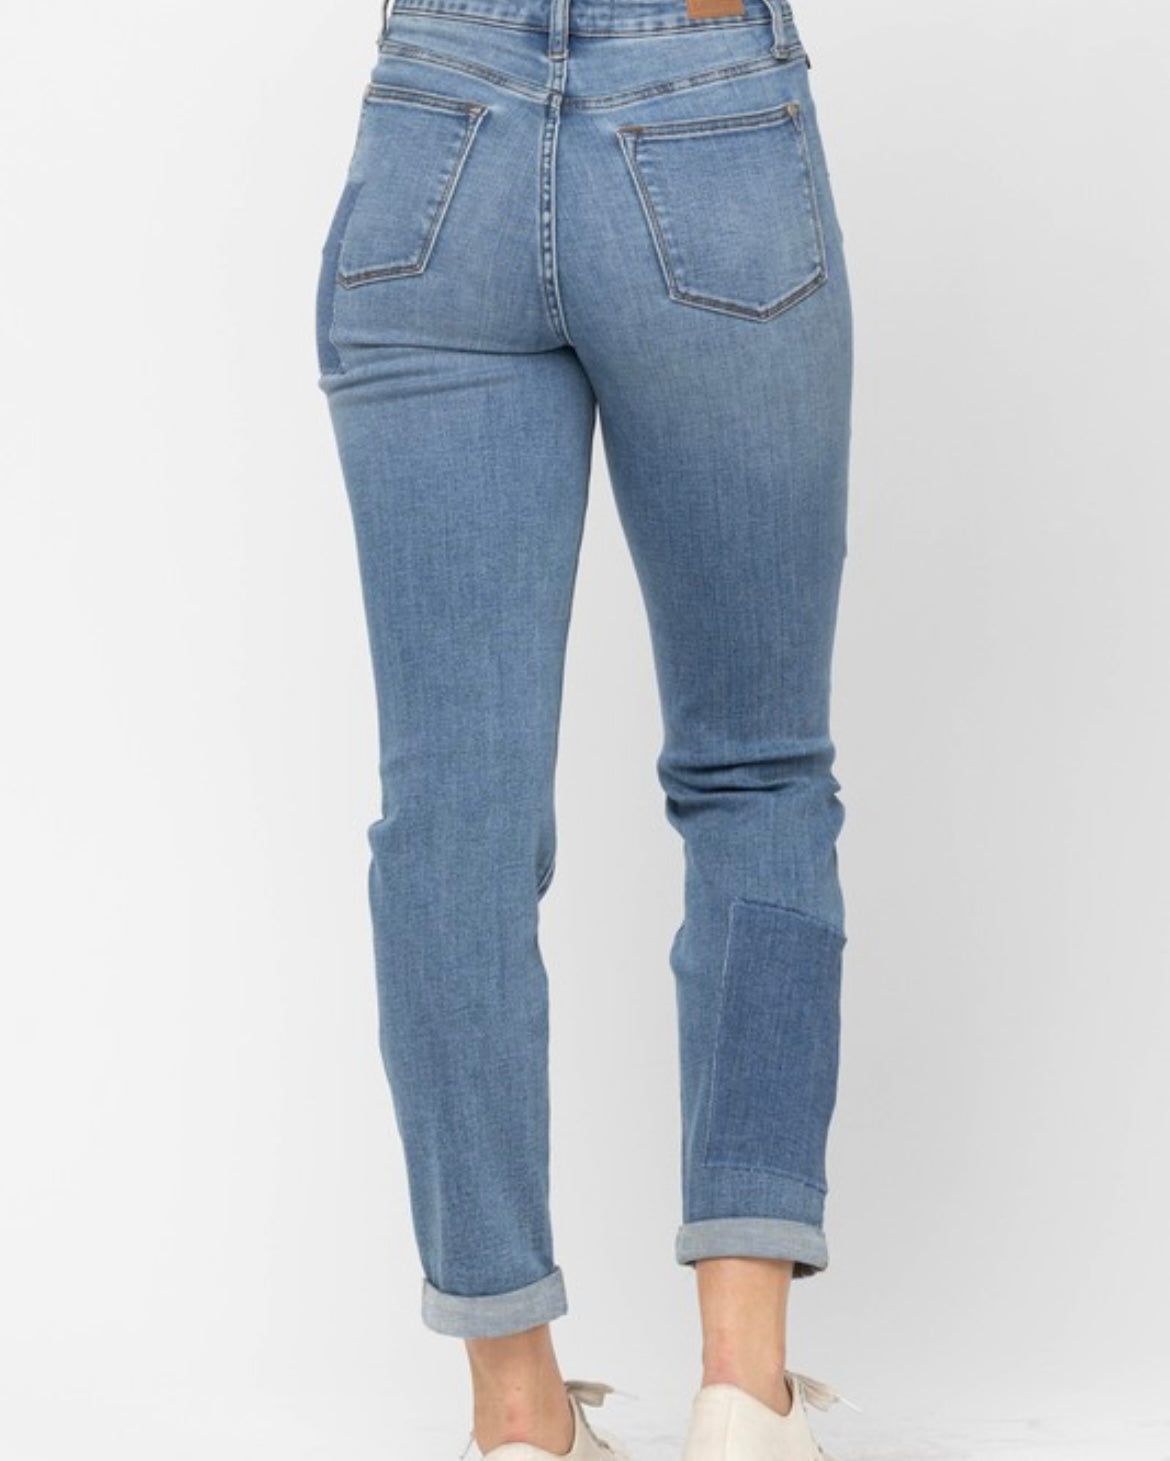 Courtney Jeans